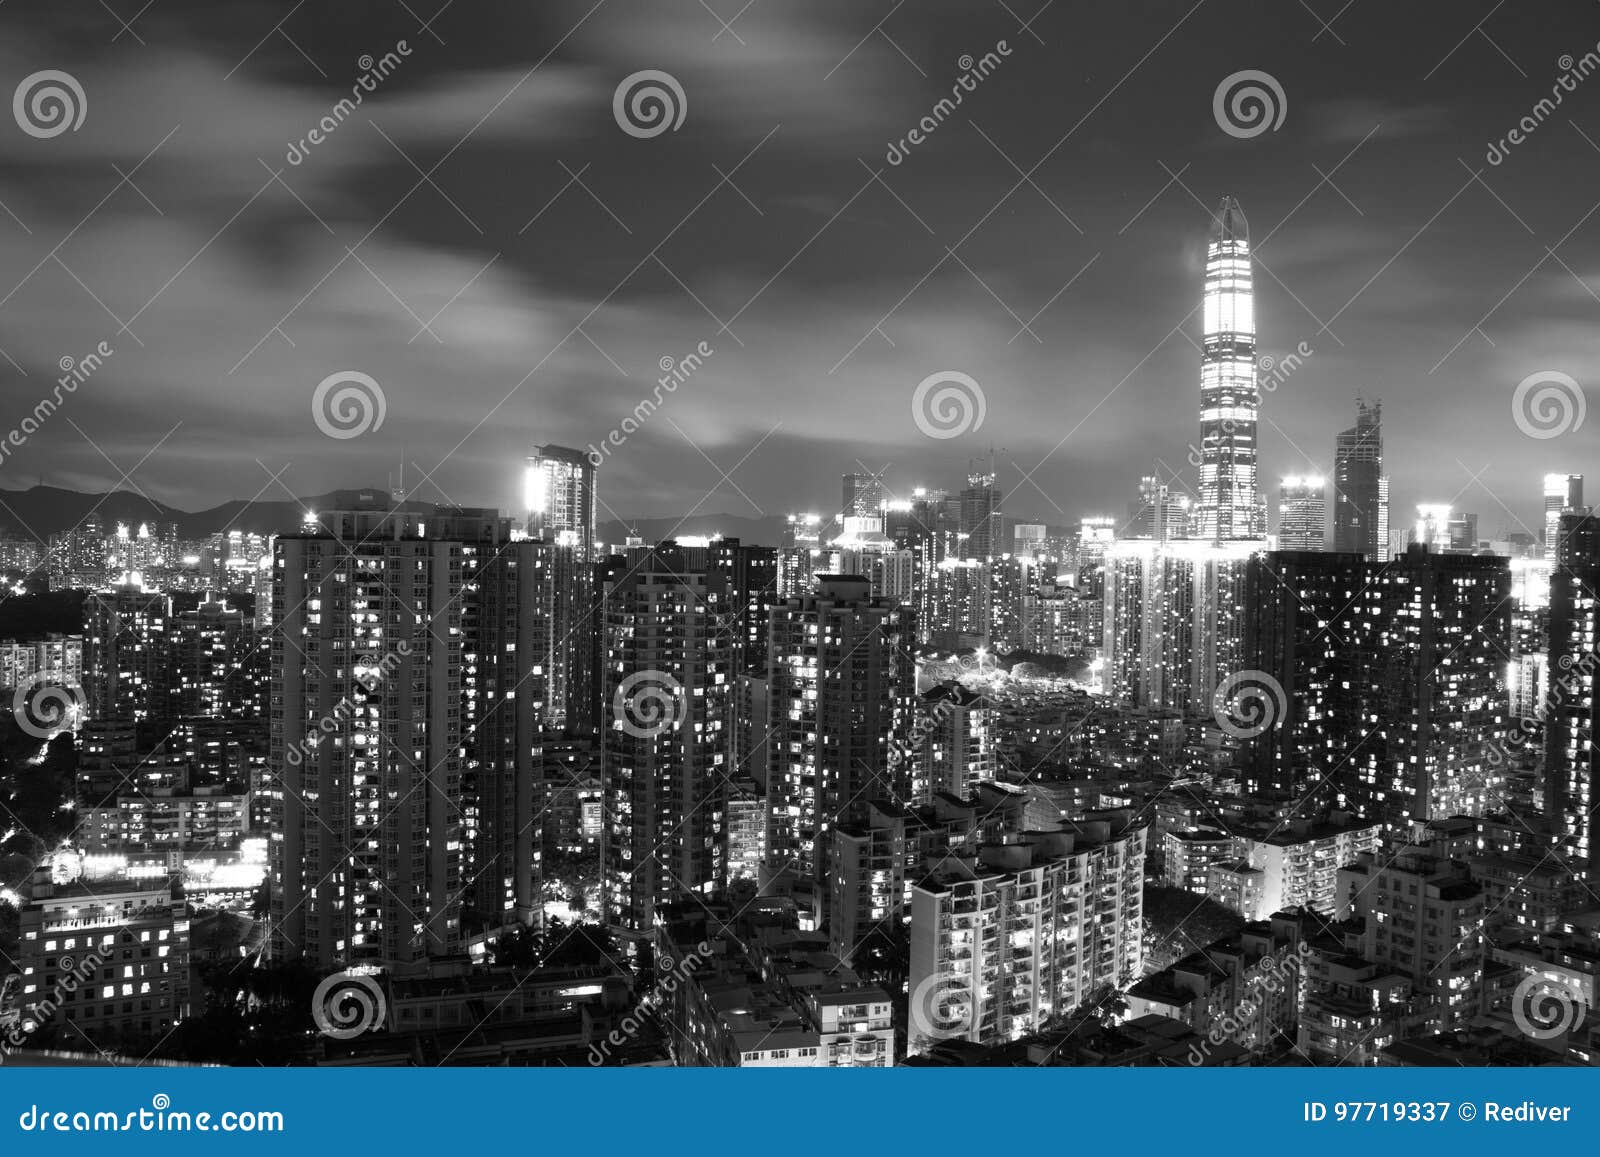 shenzhen night city scape